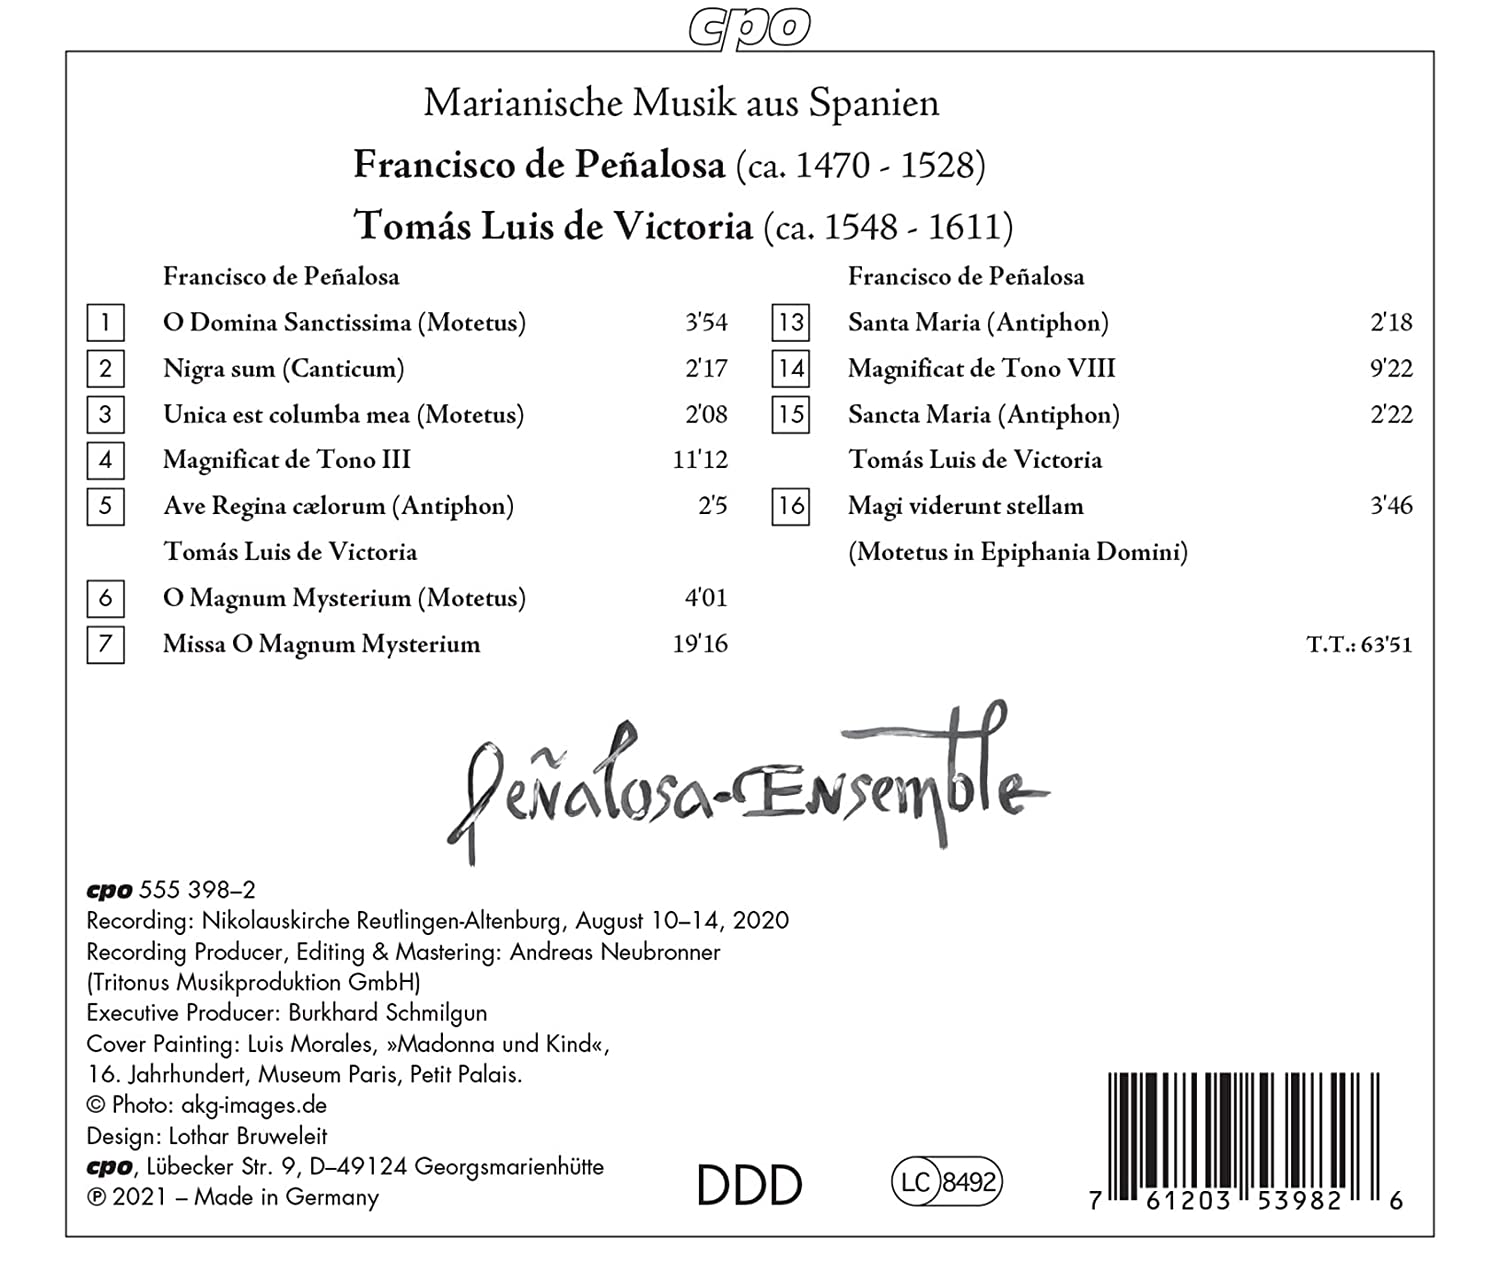 Penalosa Ensemble 페냘로사와 빅토리아의 교회 음악 작품들 (Francisco de Penalosa; Tomas Luis de Victoria: Marian Music From Spain)